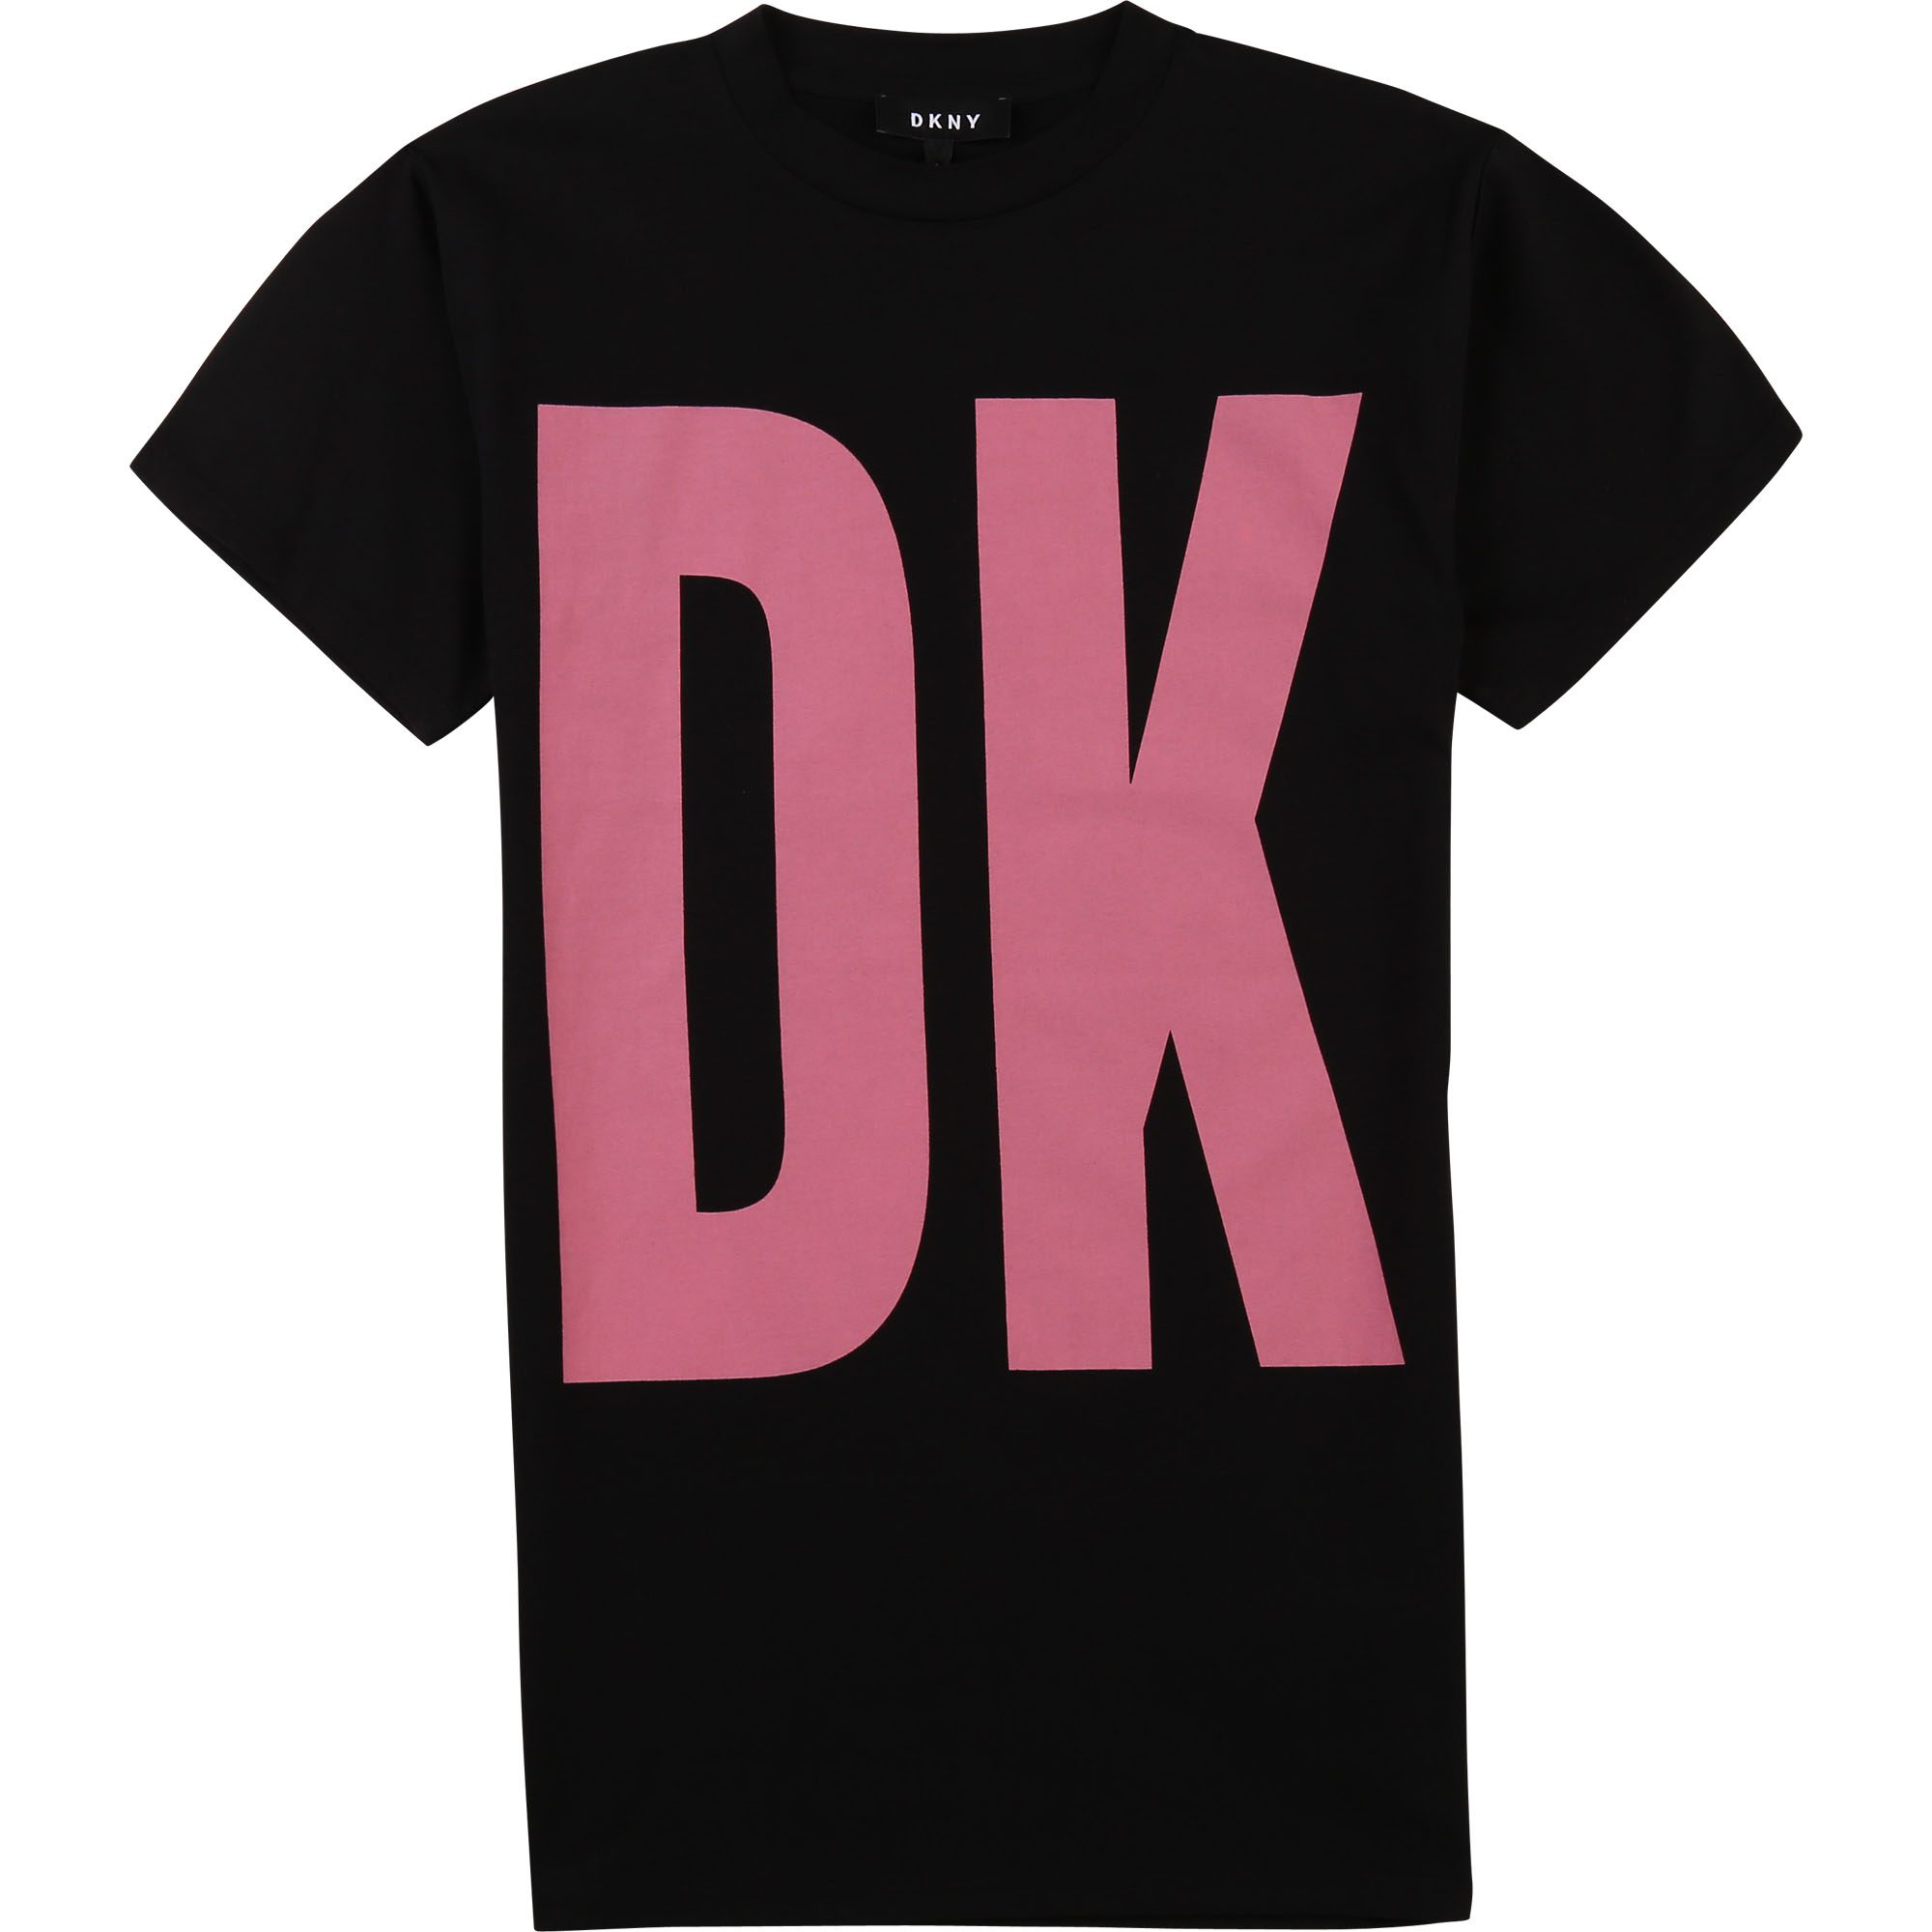 DKNY Black T-Shirt Dress D32777 - Little Angels Childrenswear